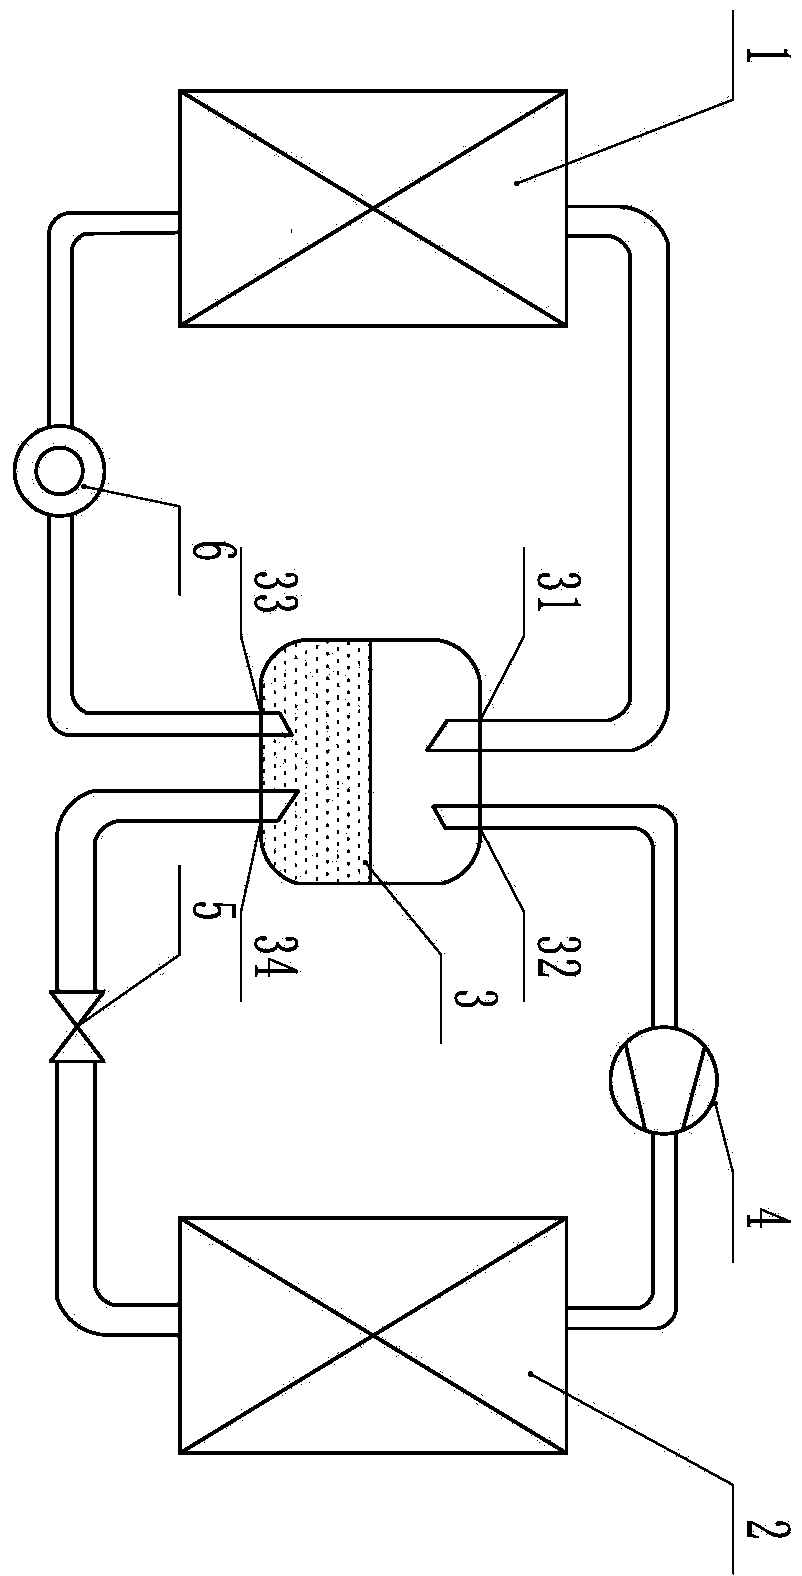 Phase change heat pump system